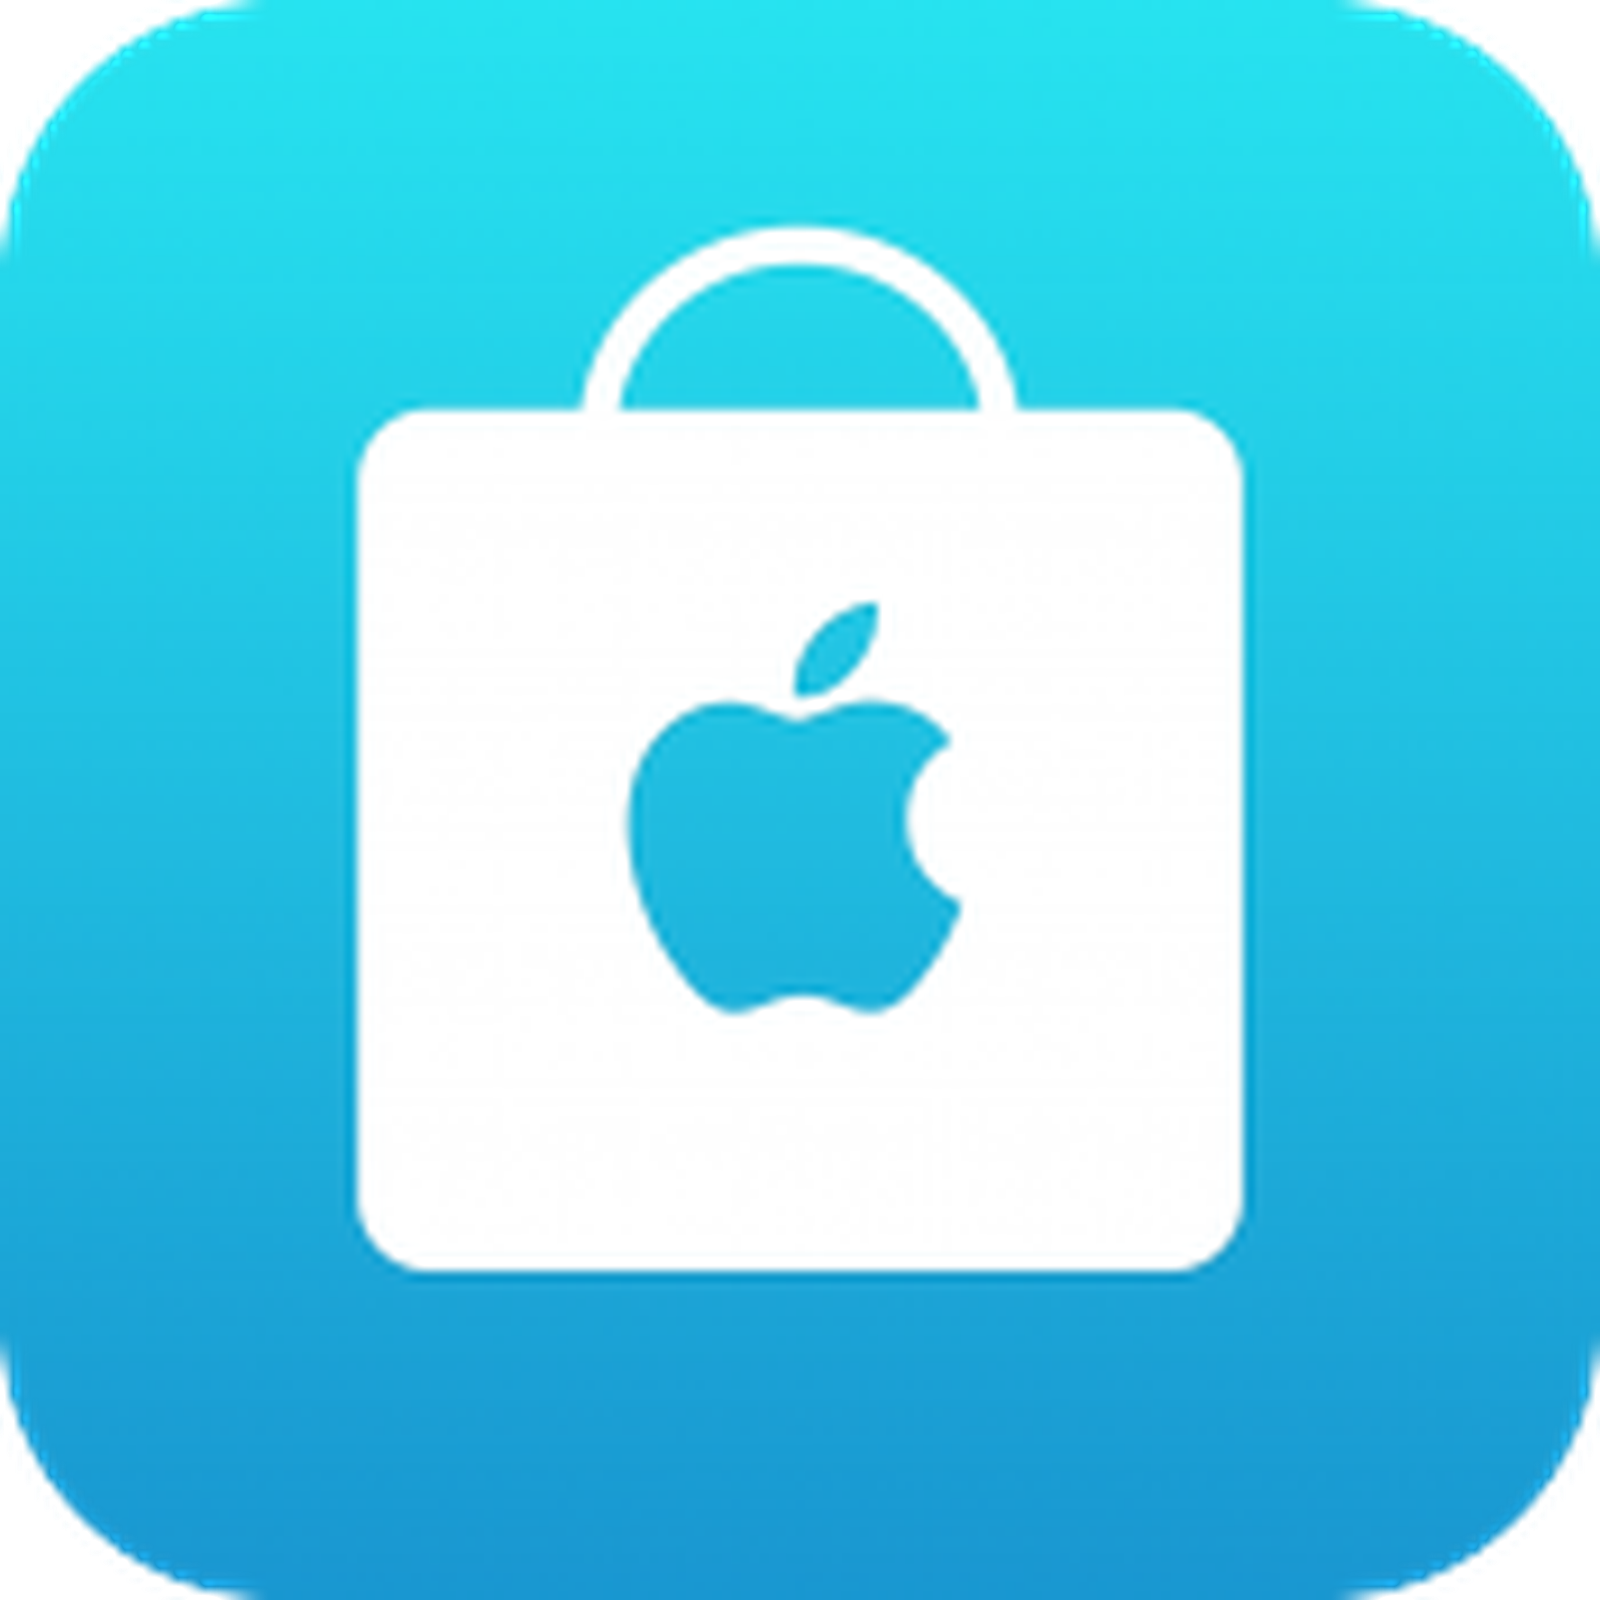 Apple Store App Gets Redesigned Look, Improved Navigation - MacRumors